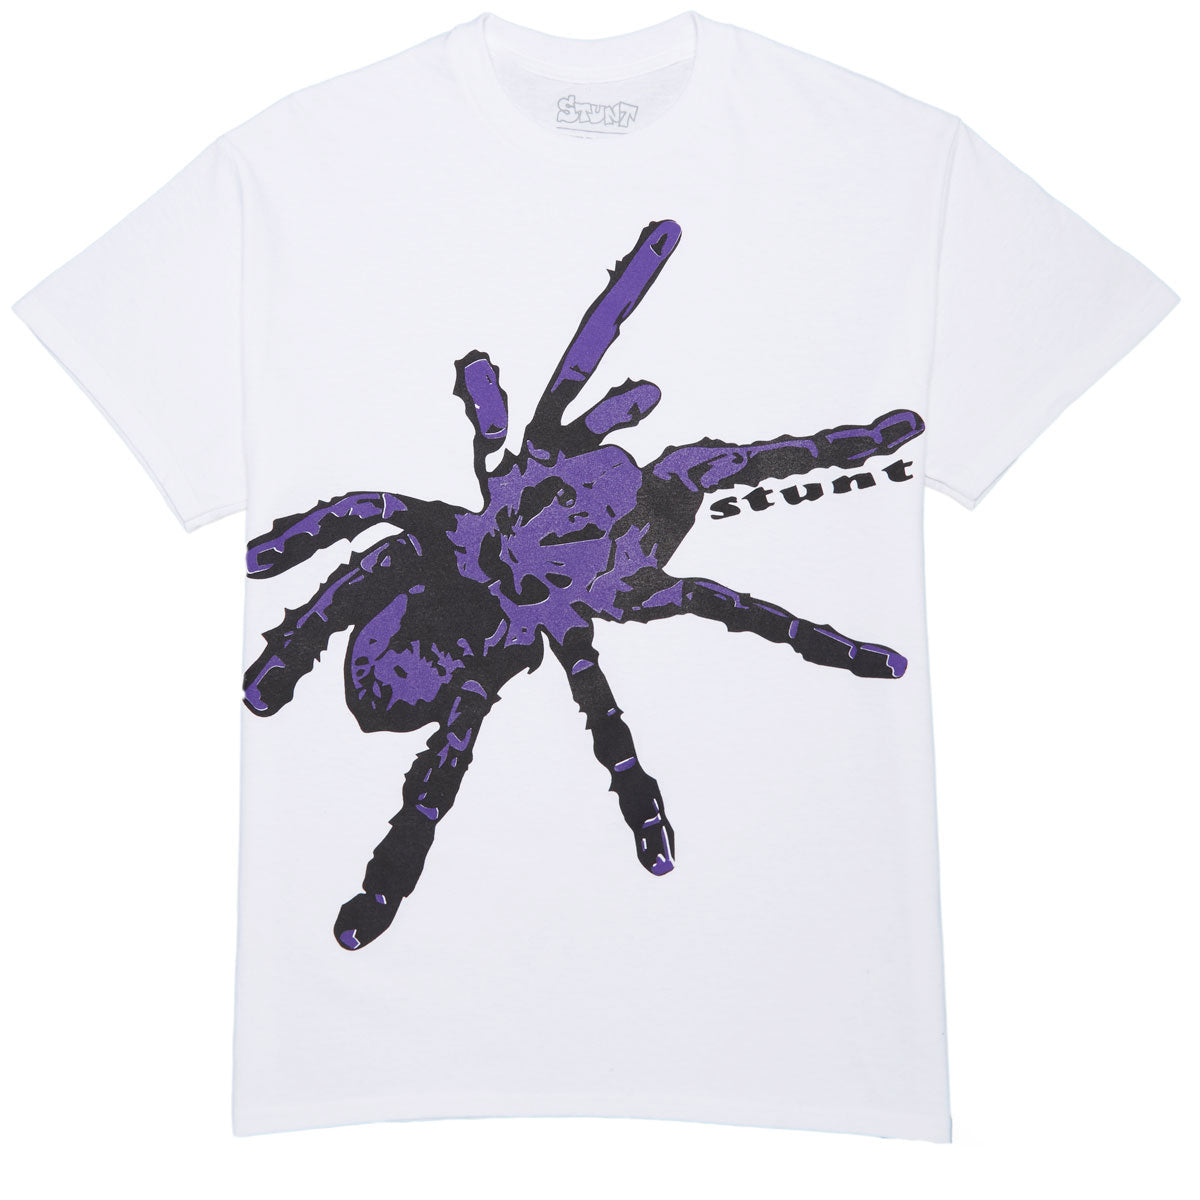 Stunt Giant Spider T-Shirt - White image 1